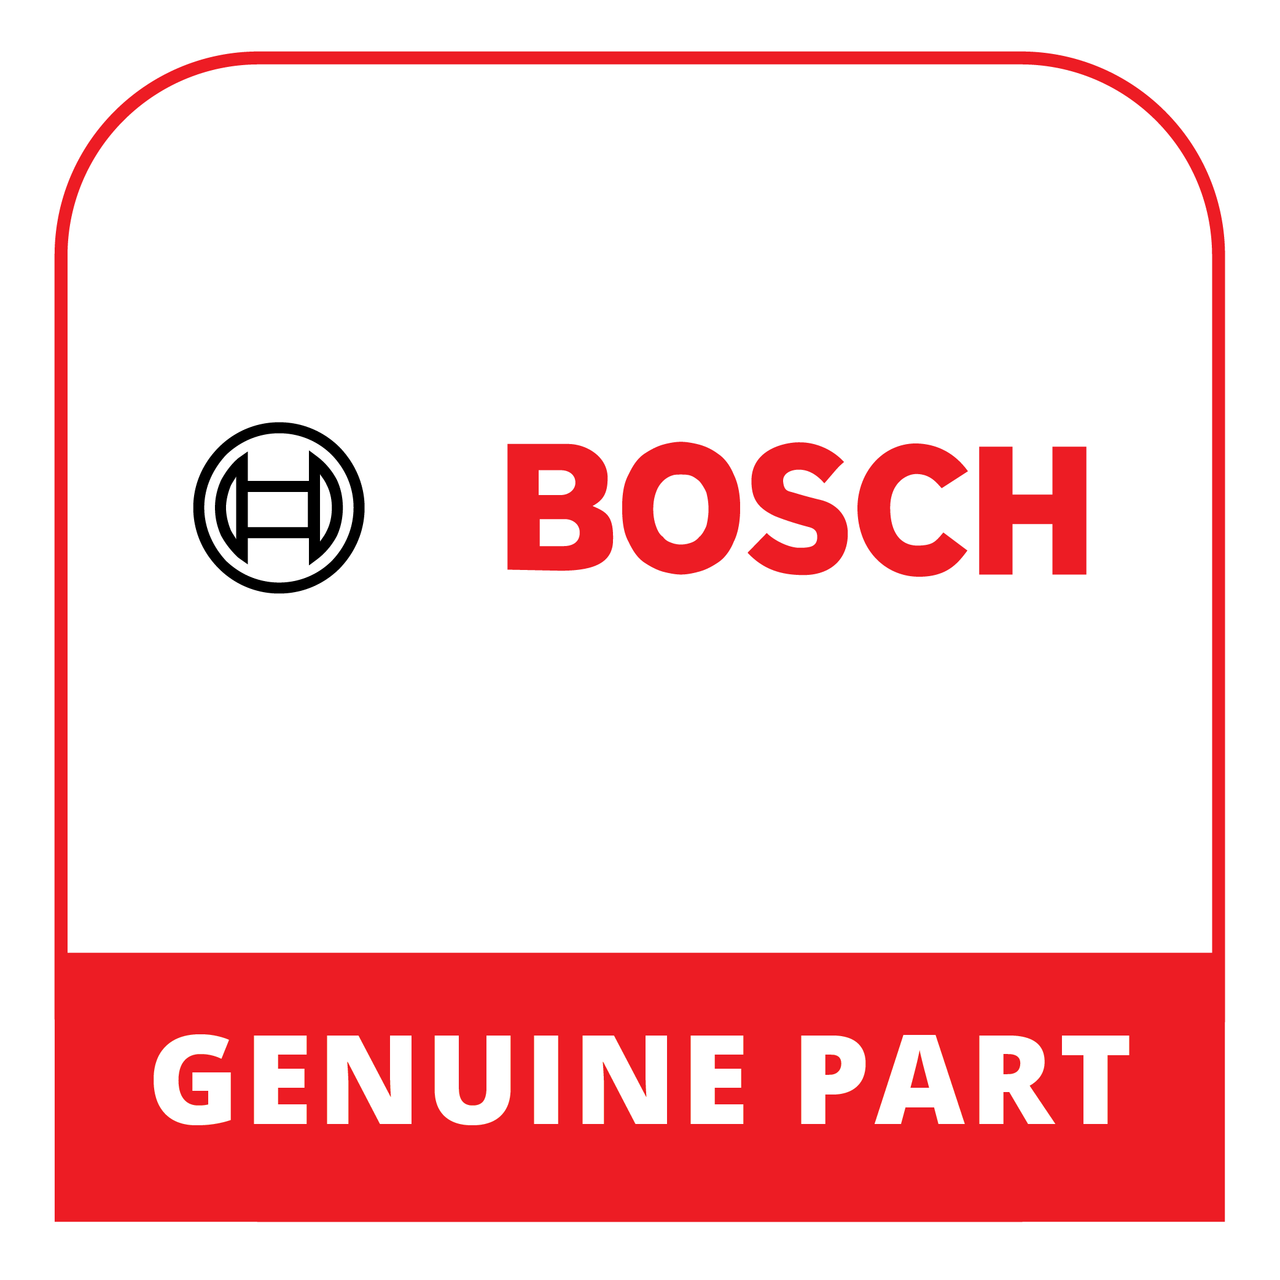 Bosch 00182238 - Analogue Pressure Se - Genuine Bosch (Thermador) Part